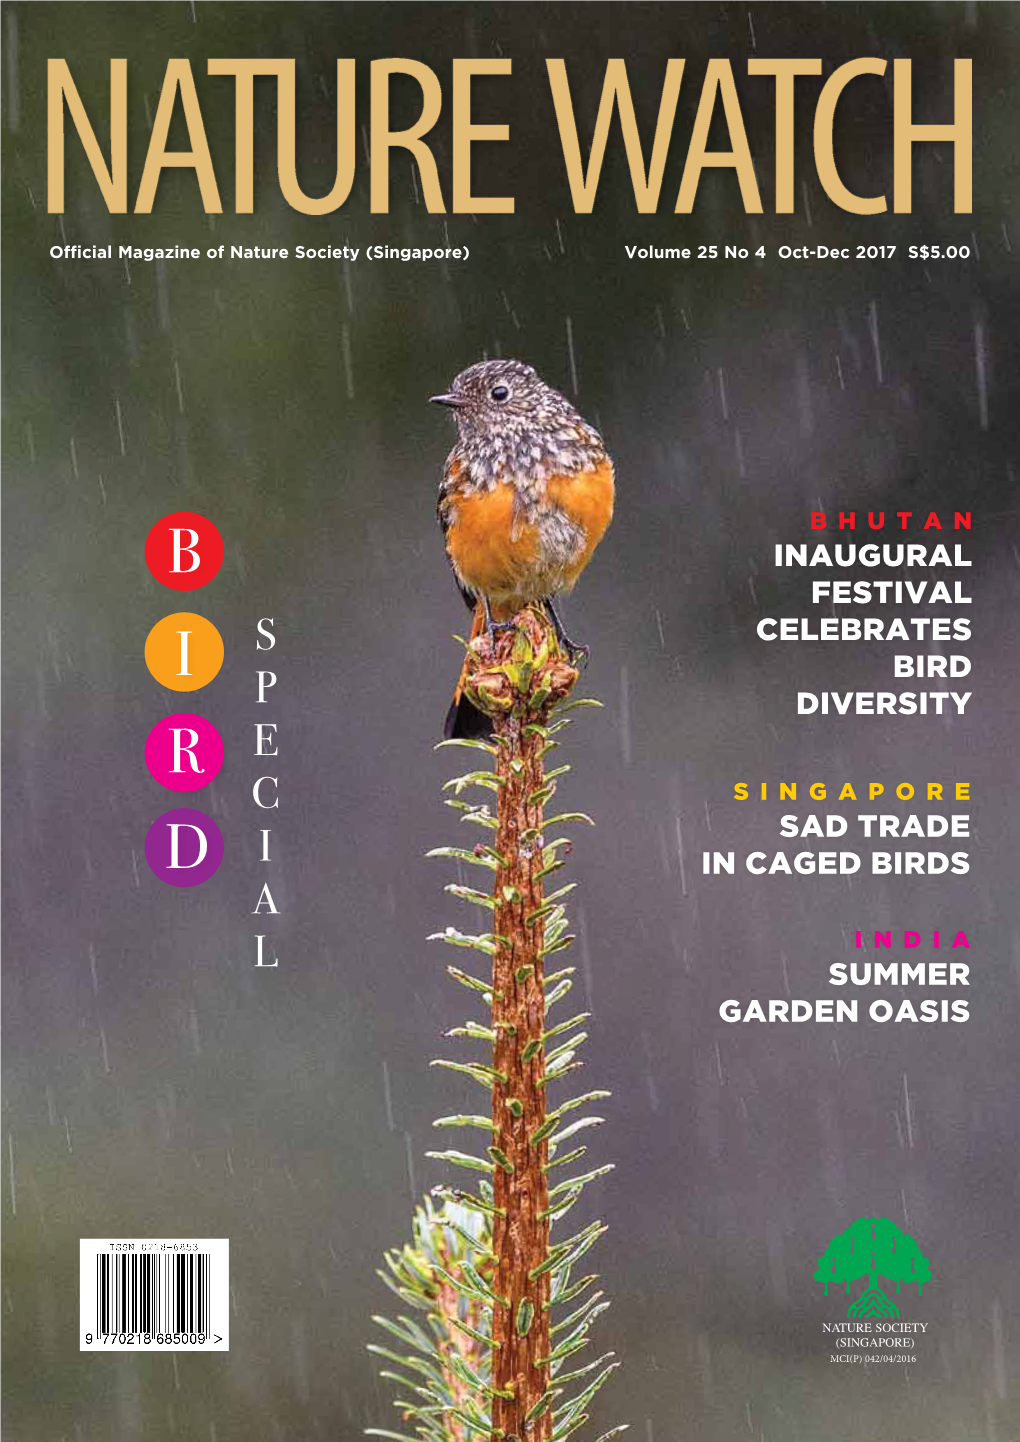 Inaugural Festival Celebrates Bird Diversity